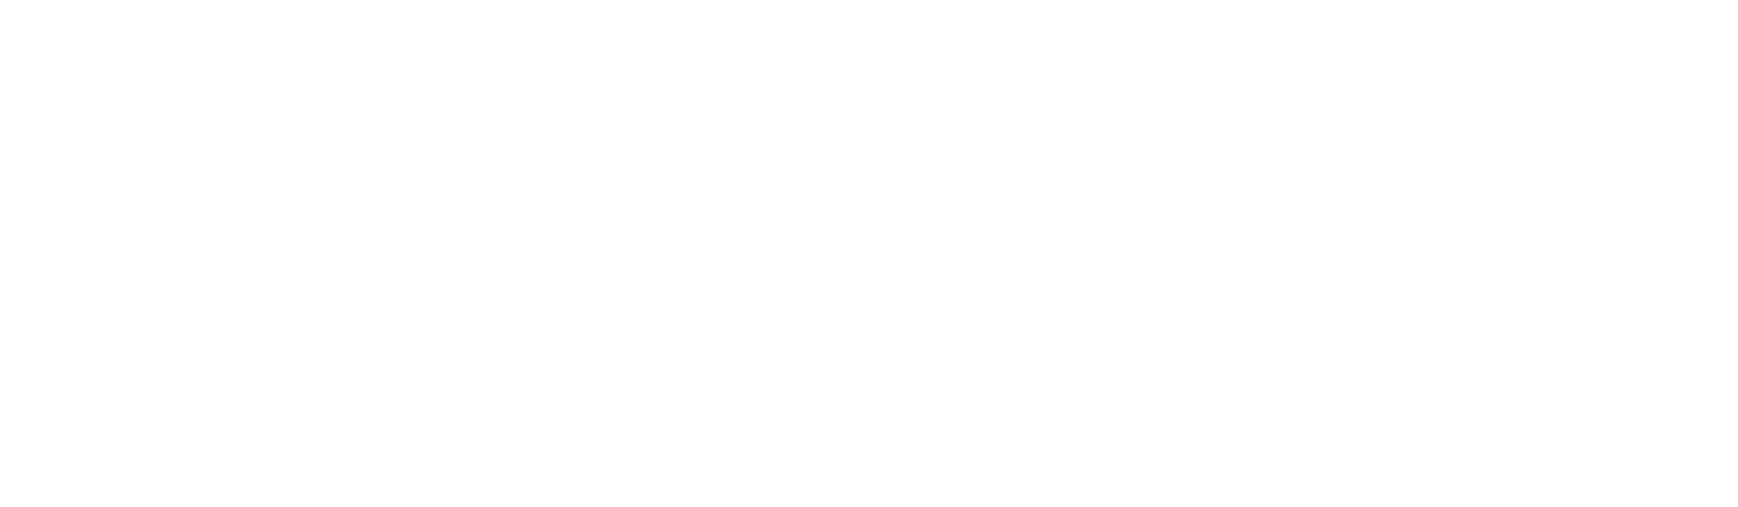 RHR-logo-transparent-white